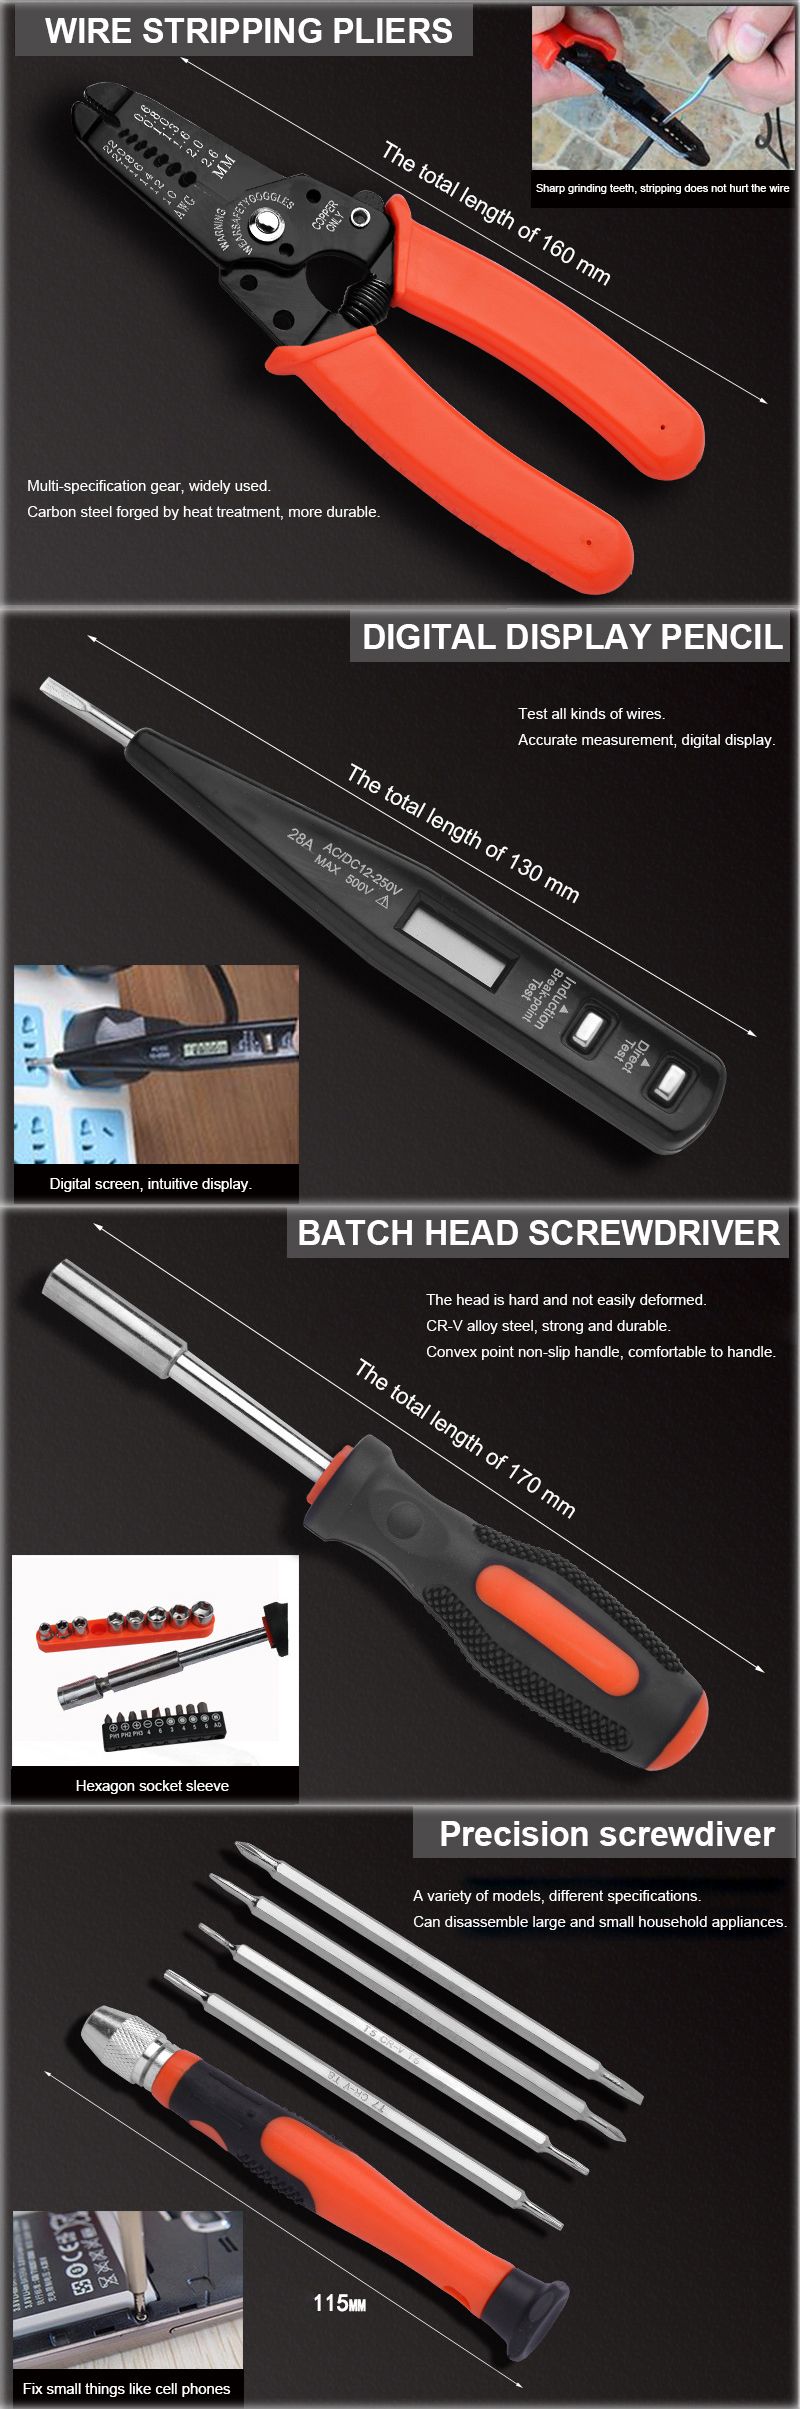 HB-New-45-Pcs-Household-Hand-Tool-Set-Wood-Working-Tools-Plastic-Toolbox-Storage-Case-Hand-Tool-Set--1543382